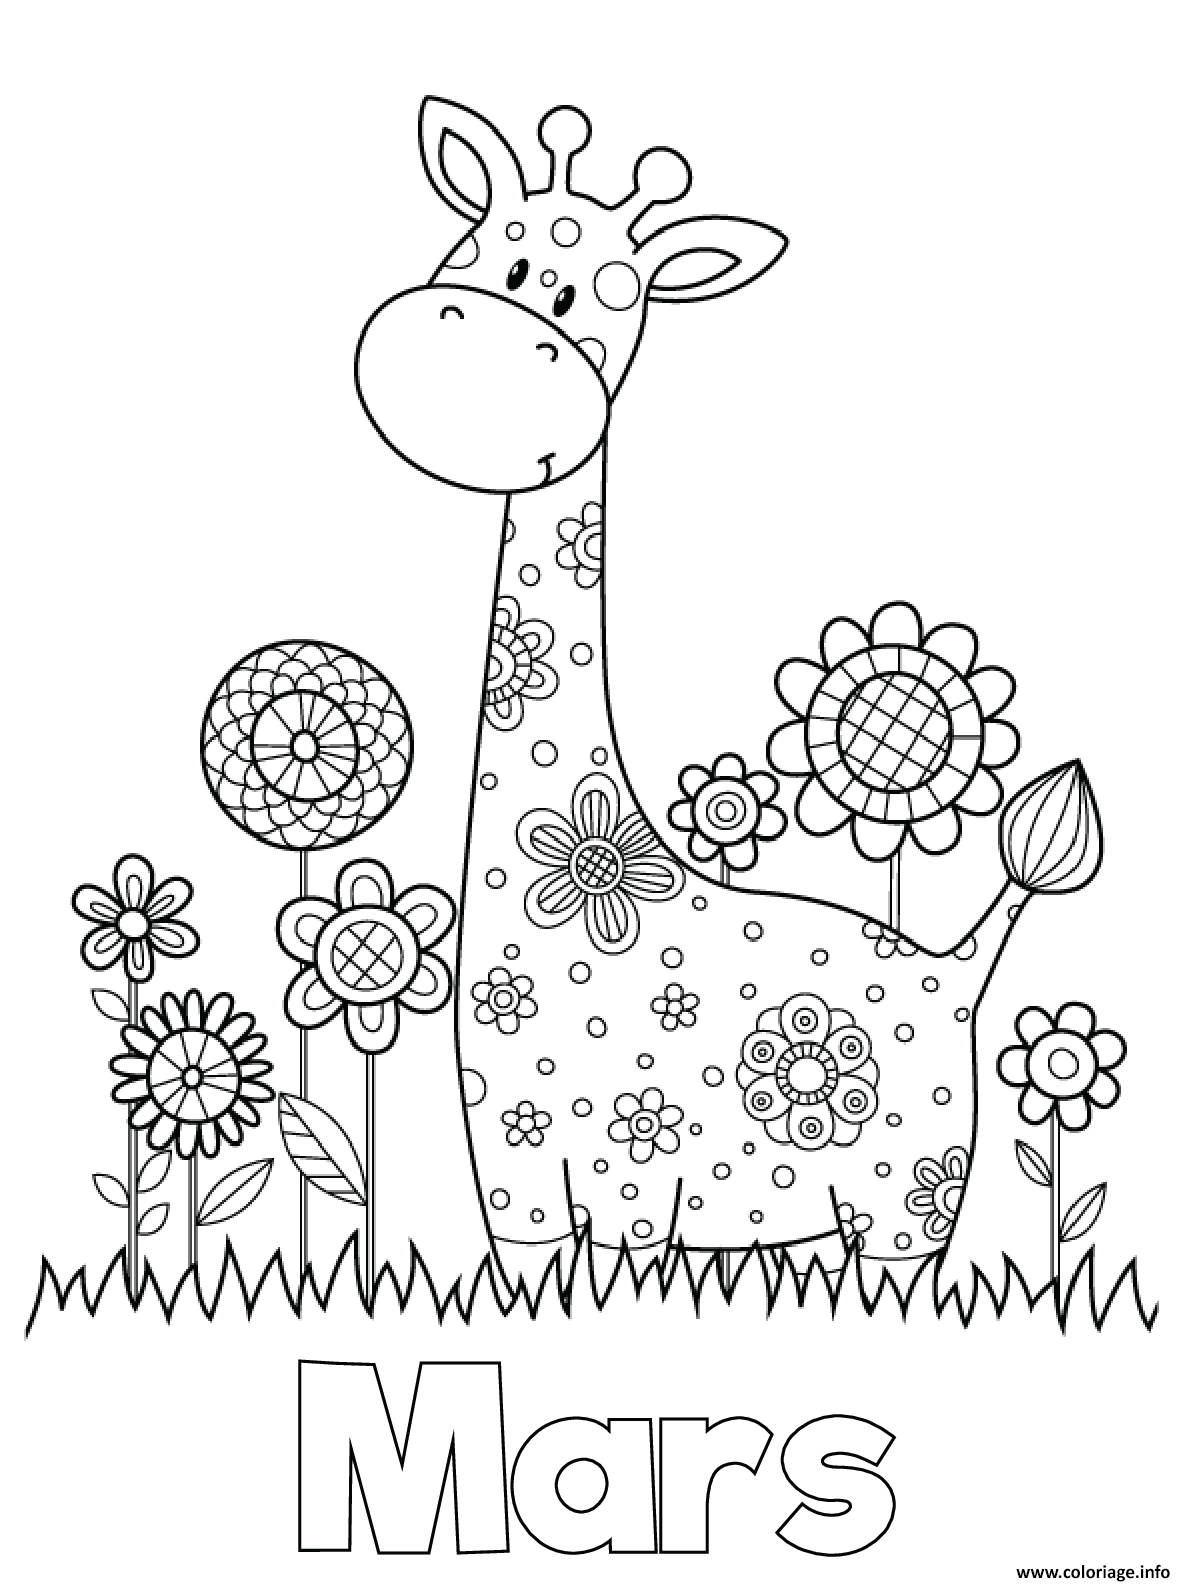 Dessin mars maternelle giraffe Coloriage Gratuit à Imprimer